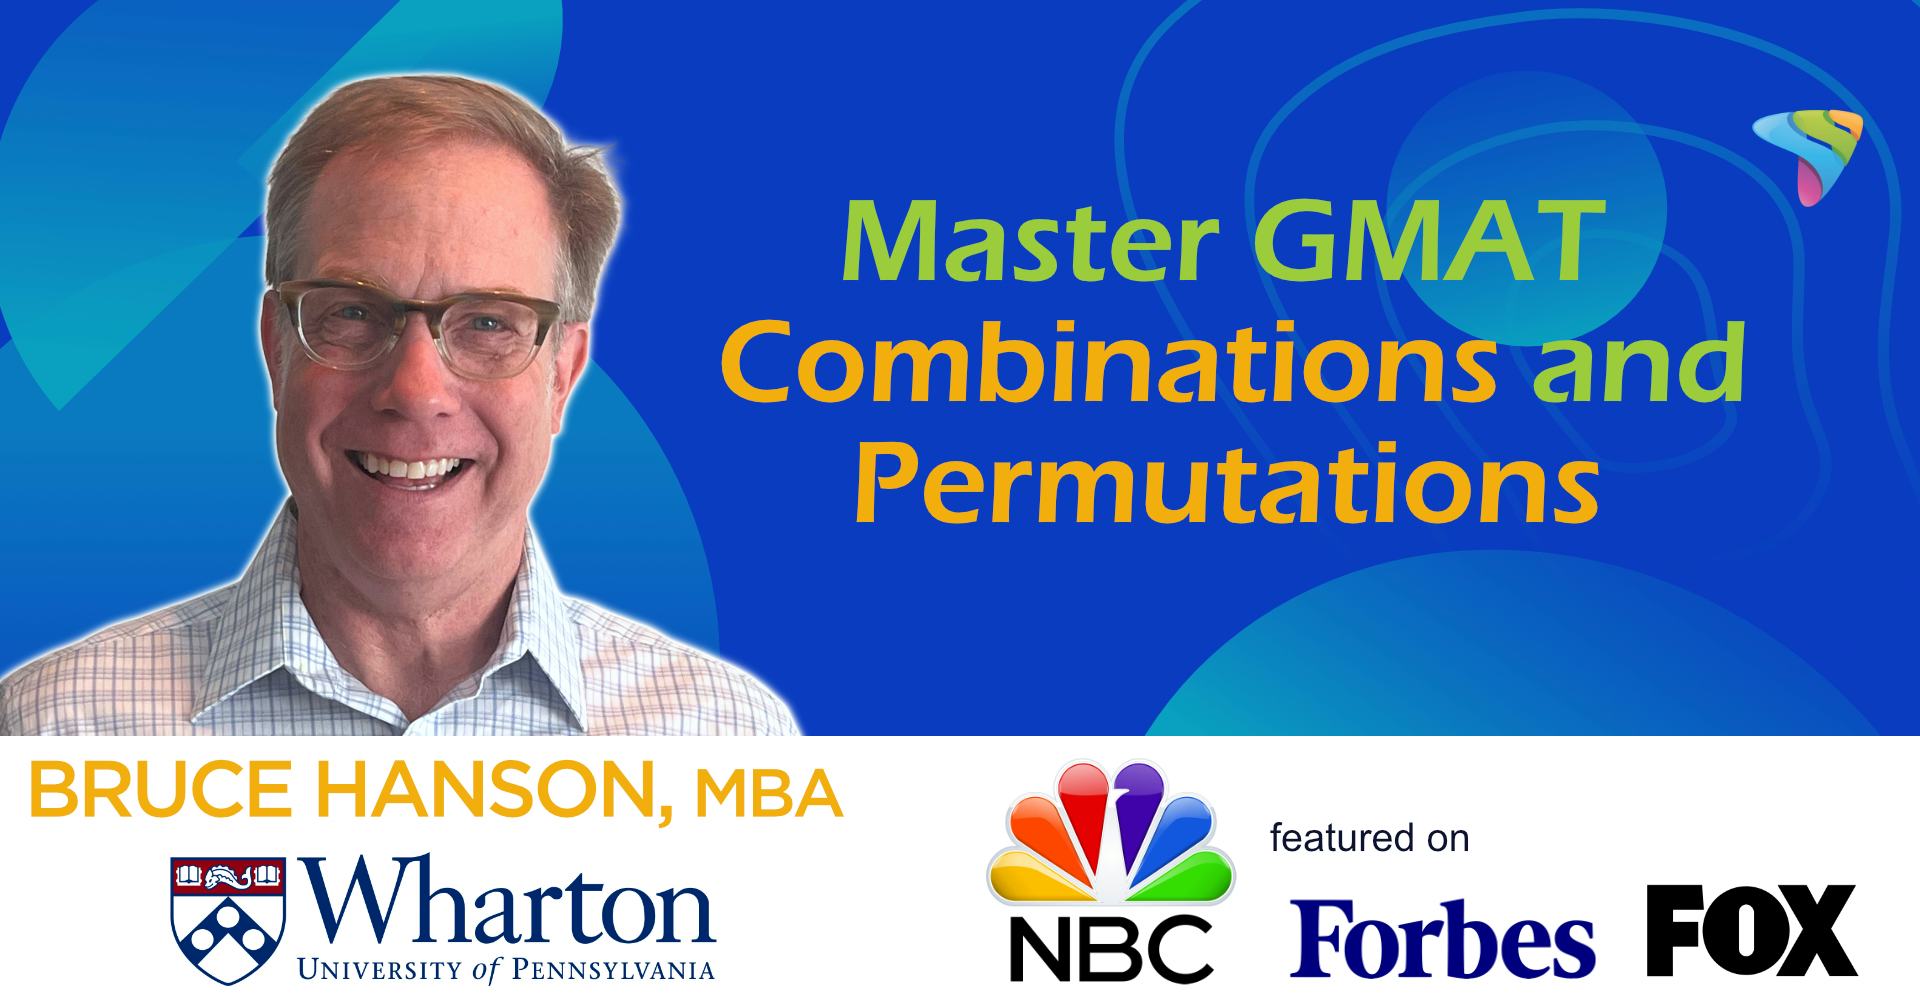 Master GMAT Combinations and Permutations!